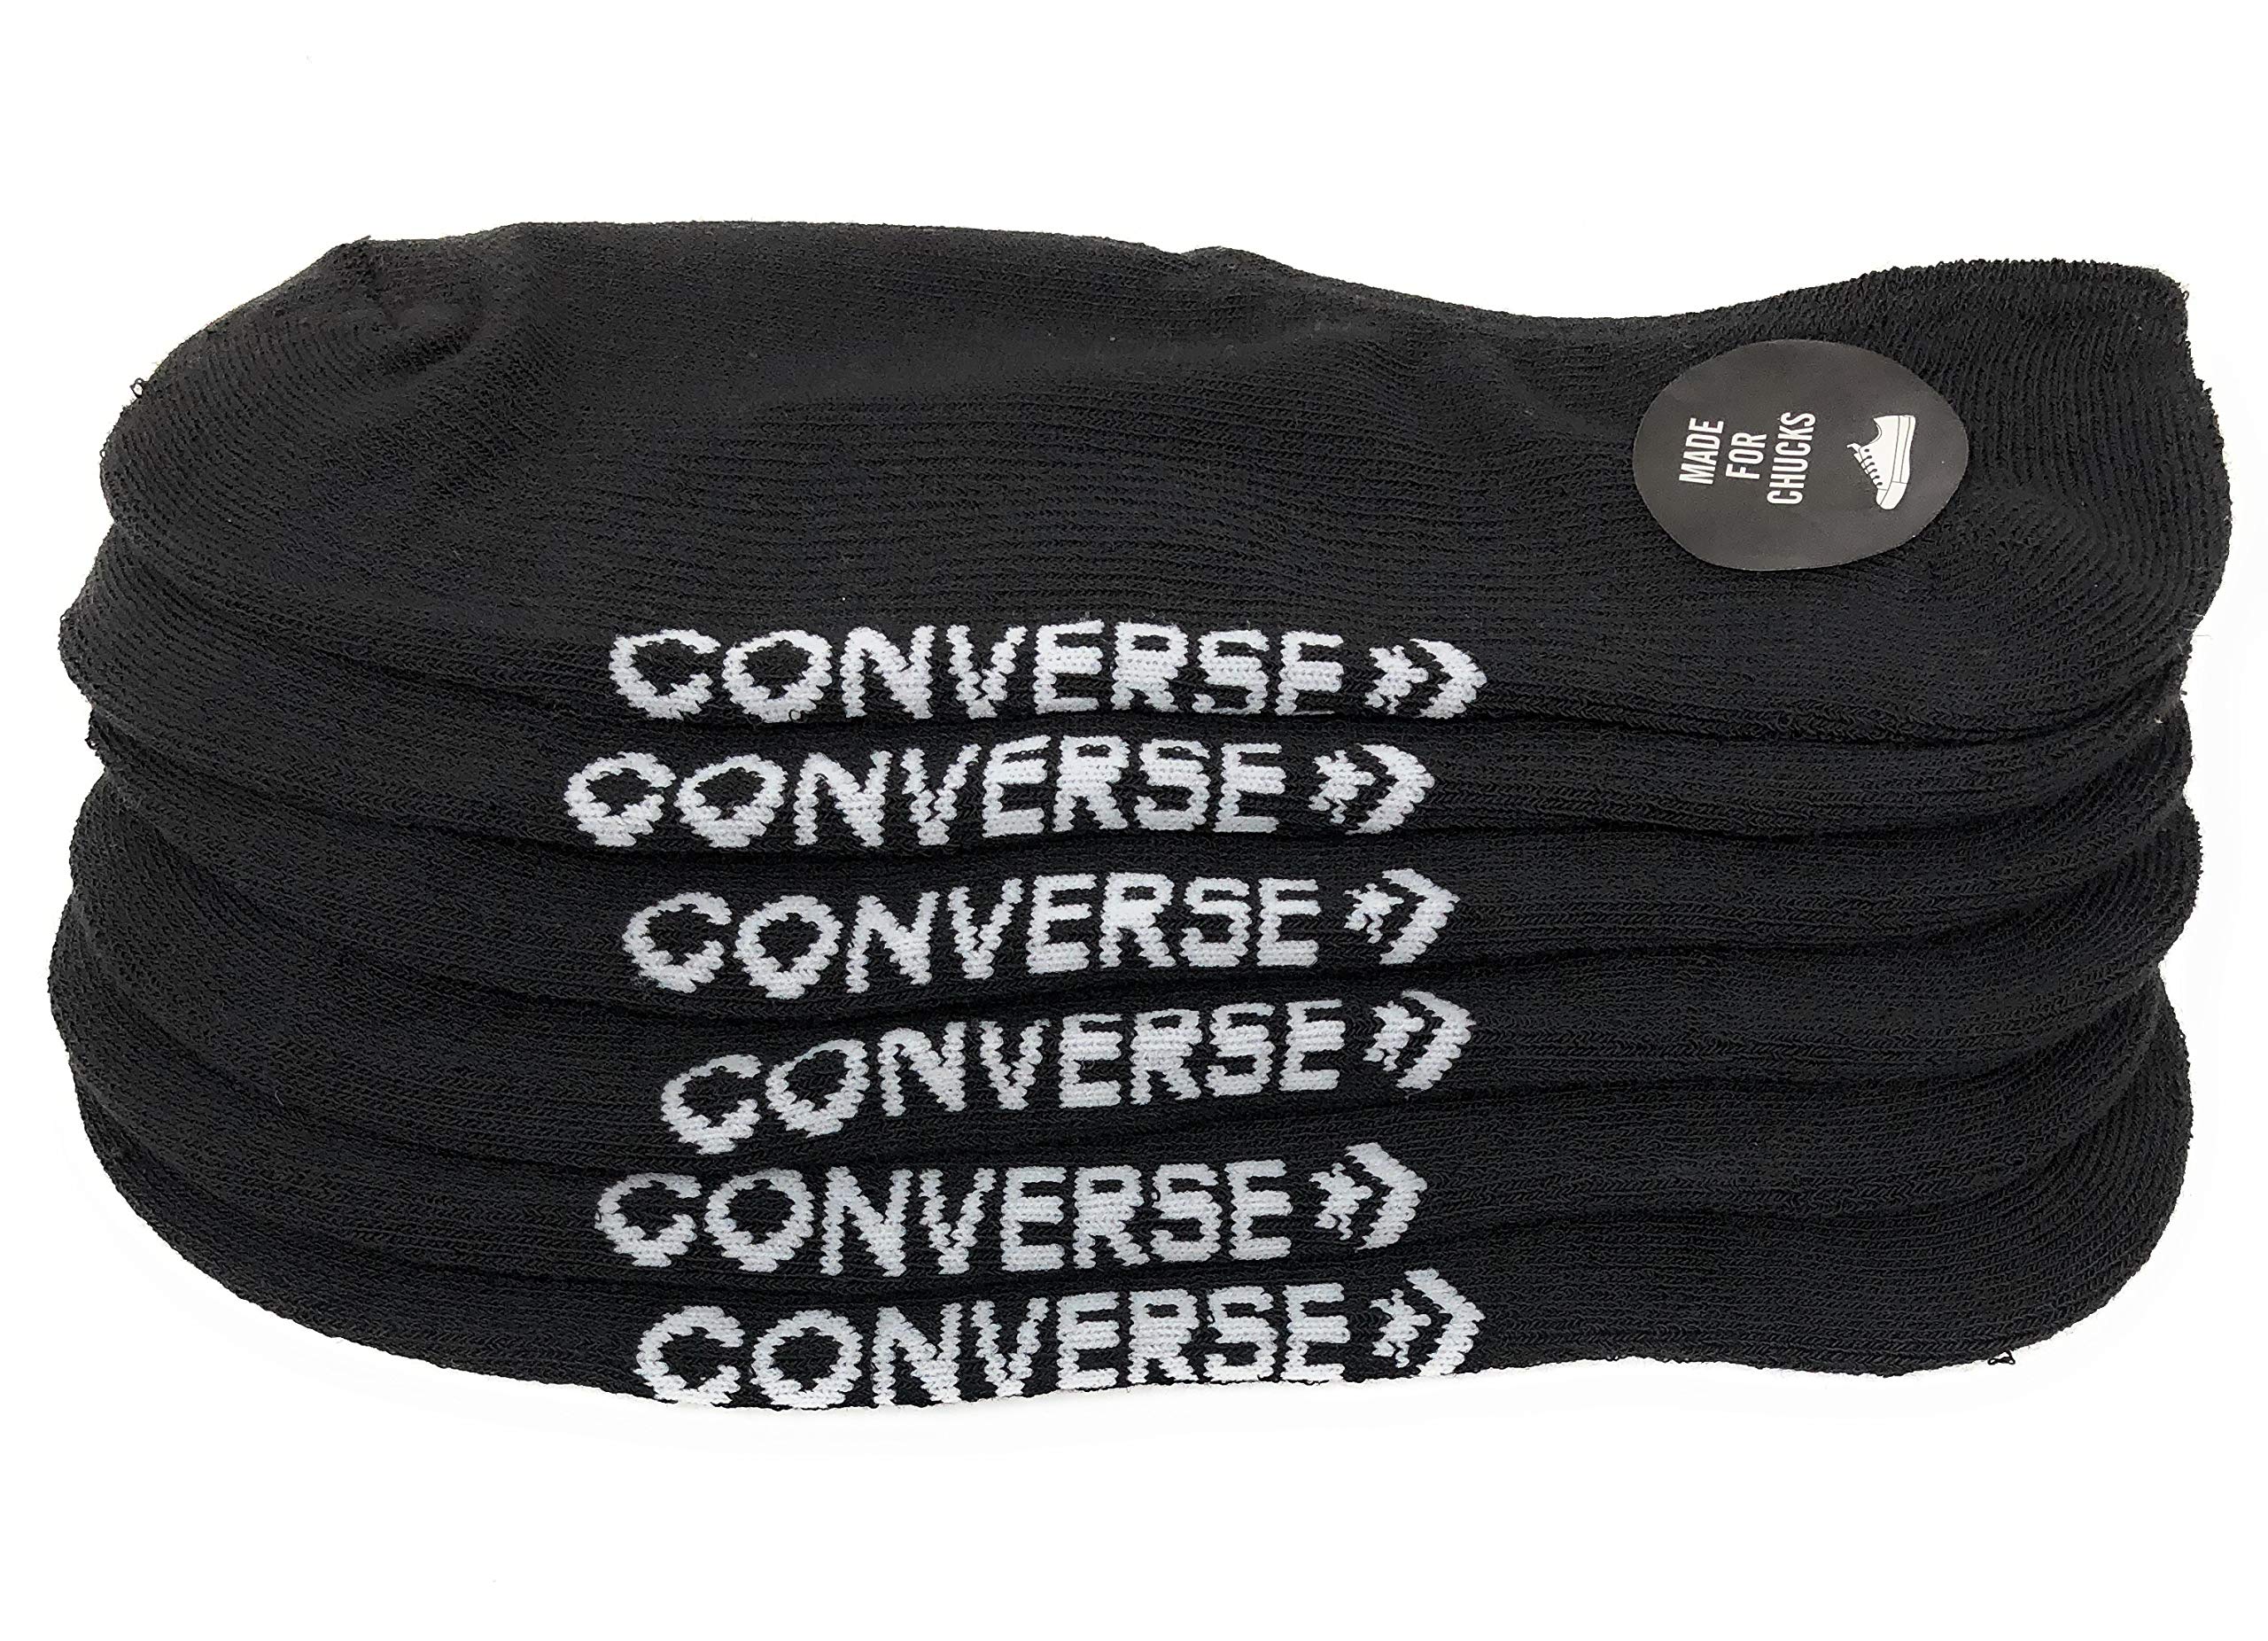 Converse Men's 3 Pack Half Cushion Ultra Low Socks No Show Made For Chucks Shoe Size 6-12 (Black)